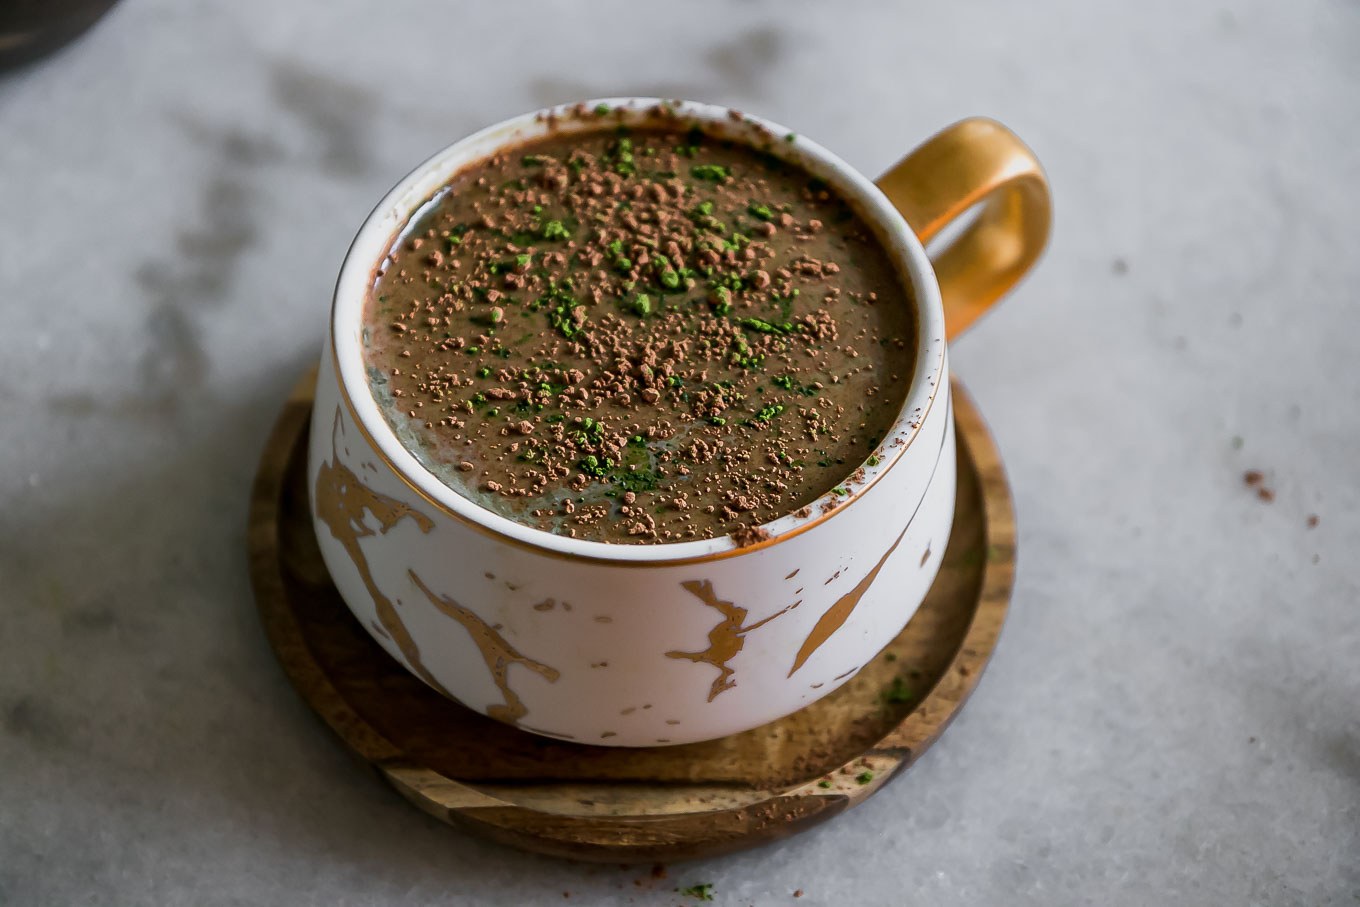 Matcha & CO Powdered Tea - Spicy Cacao Chai